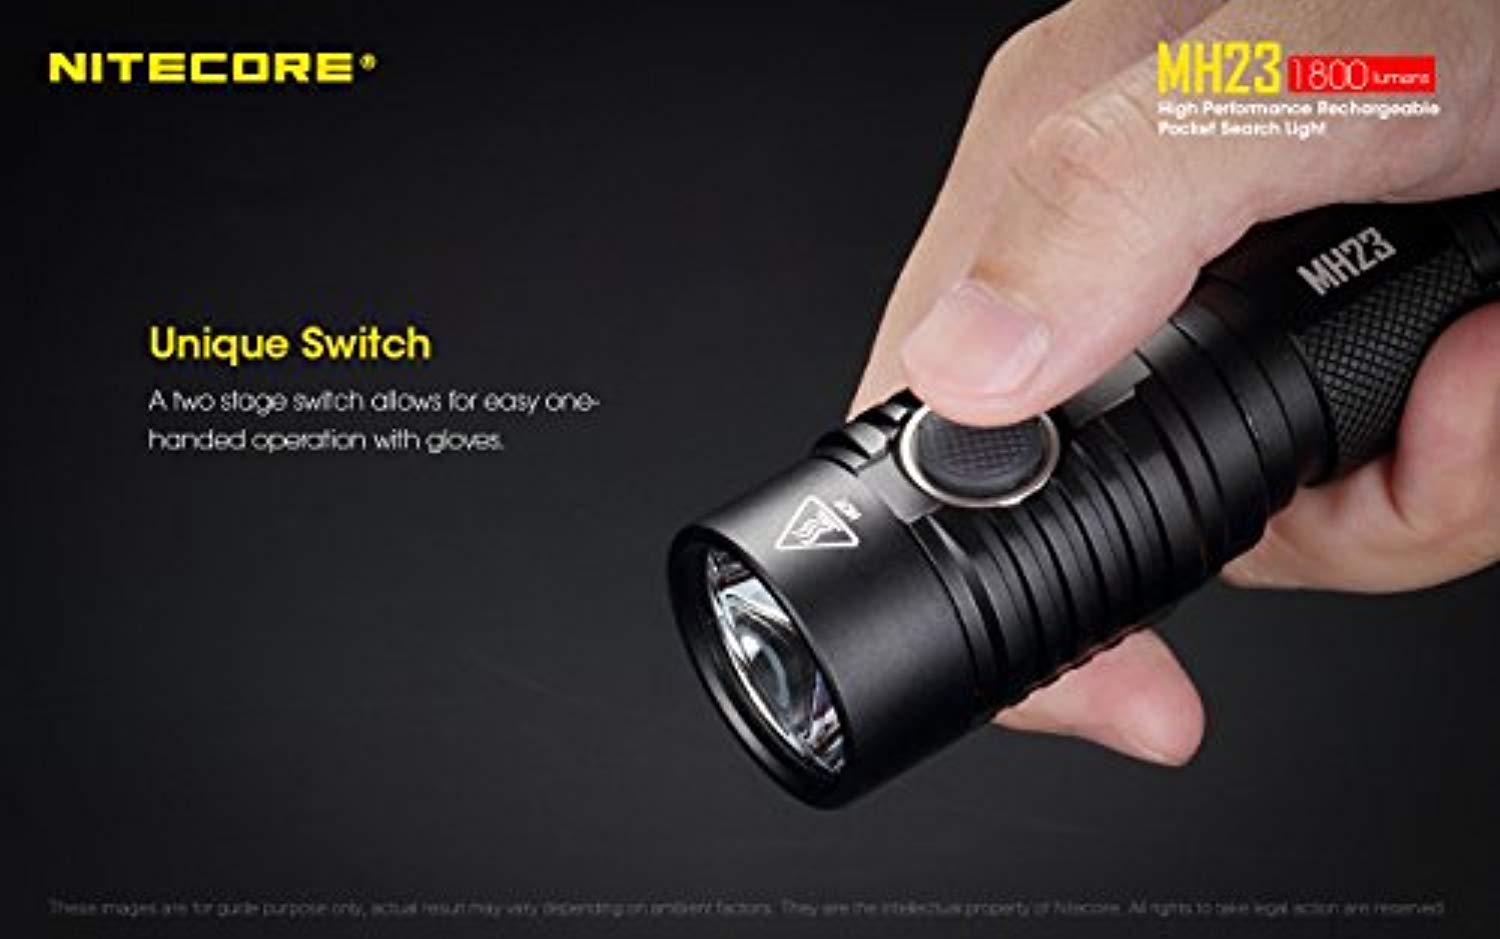 Nitecore MH23 CREE XHP35 HD 1800 Lumens Rechargeable LED Flashlight